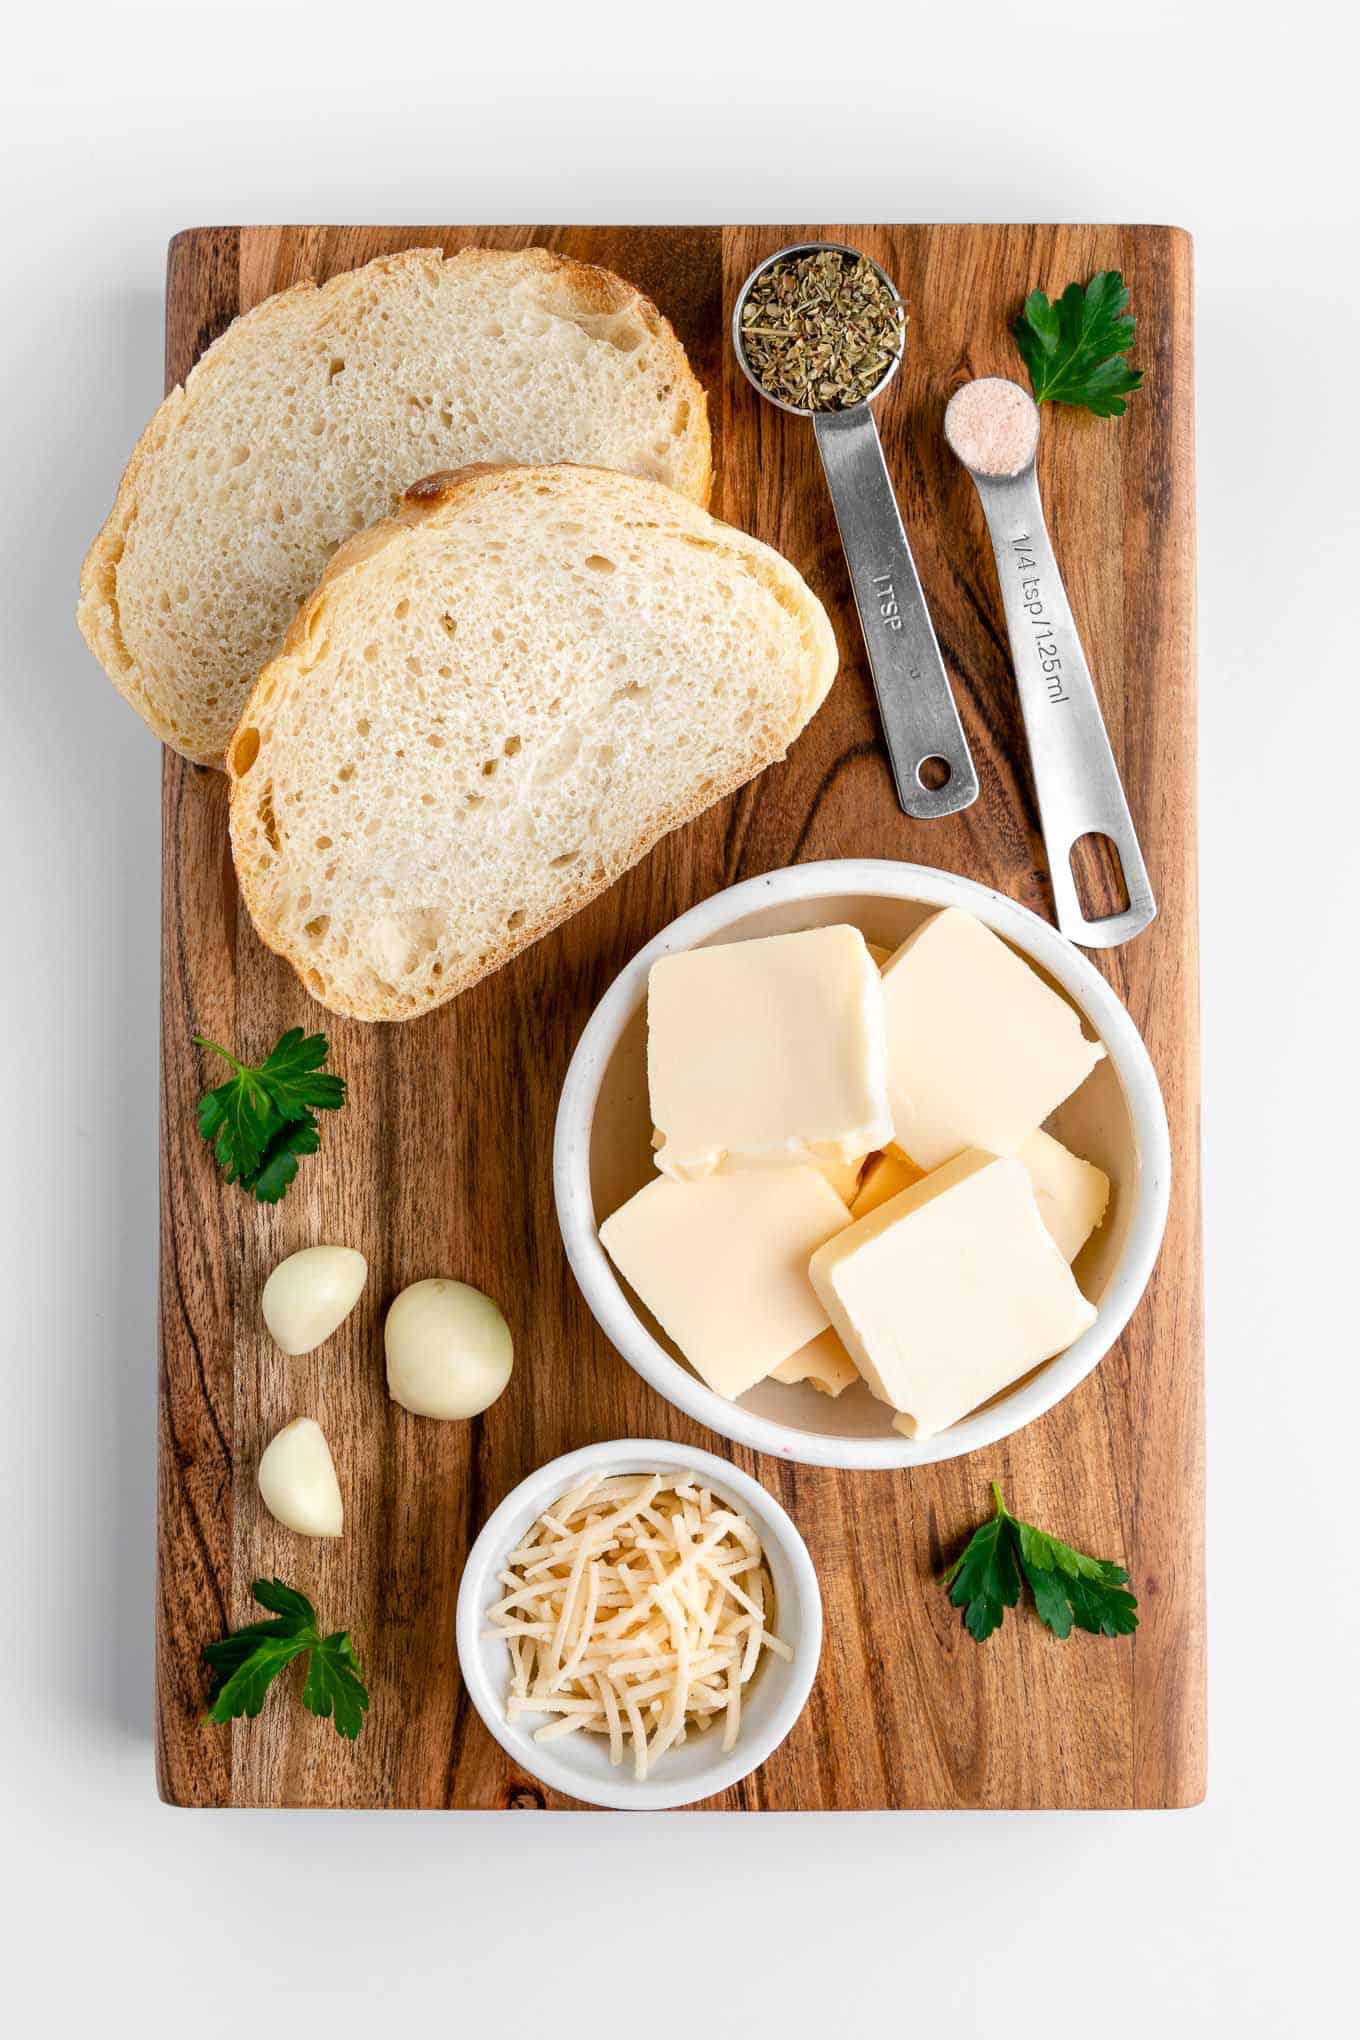 wood board topped with sourdough bread, vegan butter, parsley, italian seasoning, garlic cloves, and salt